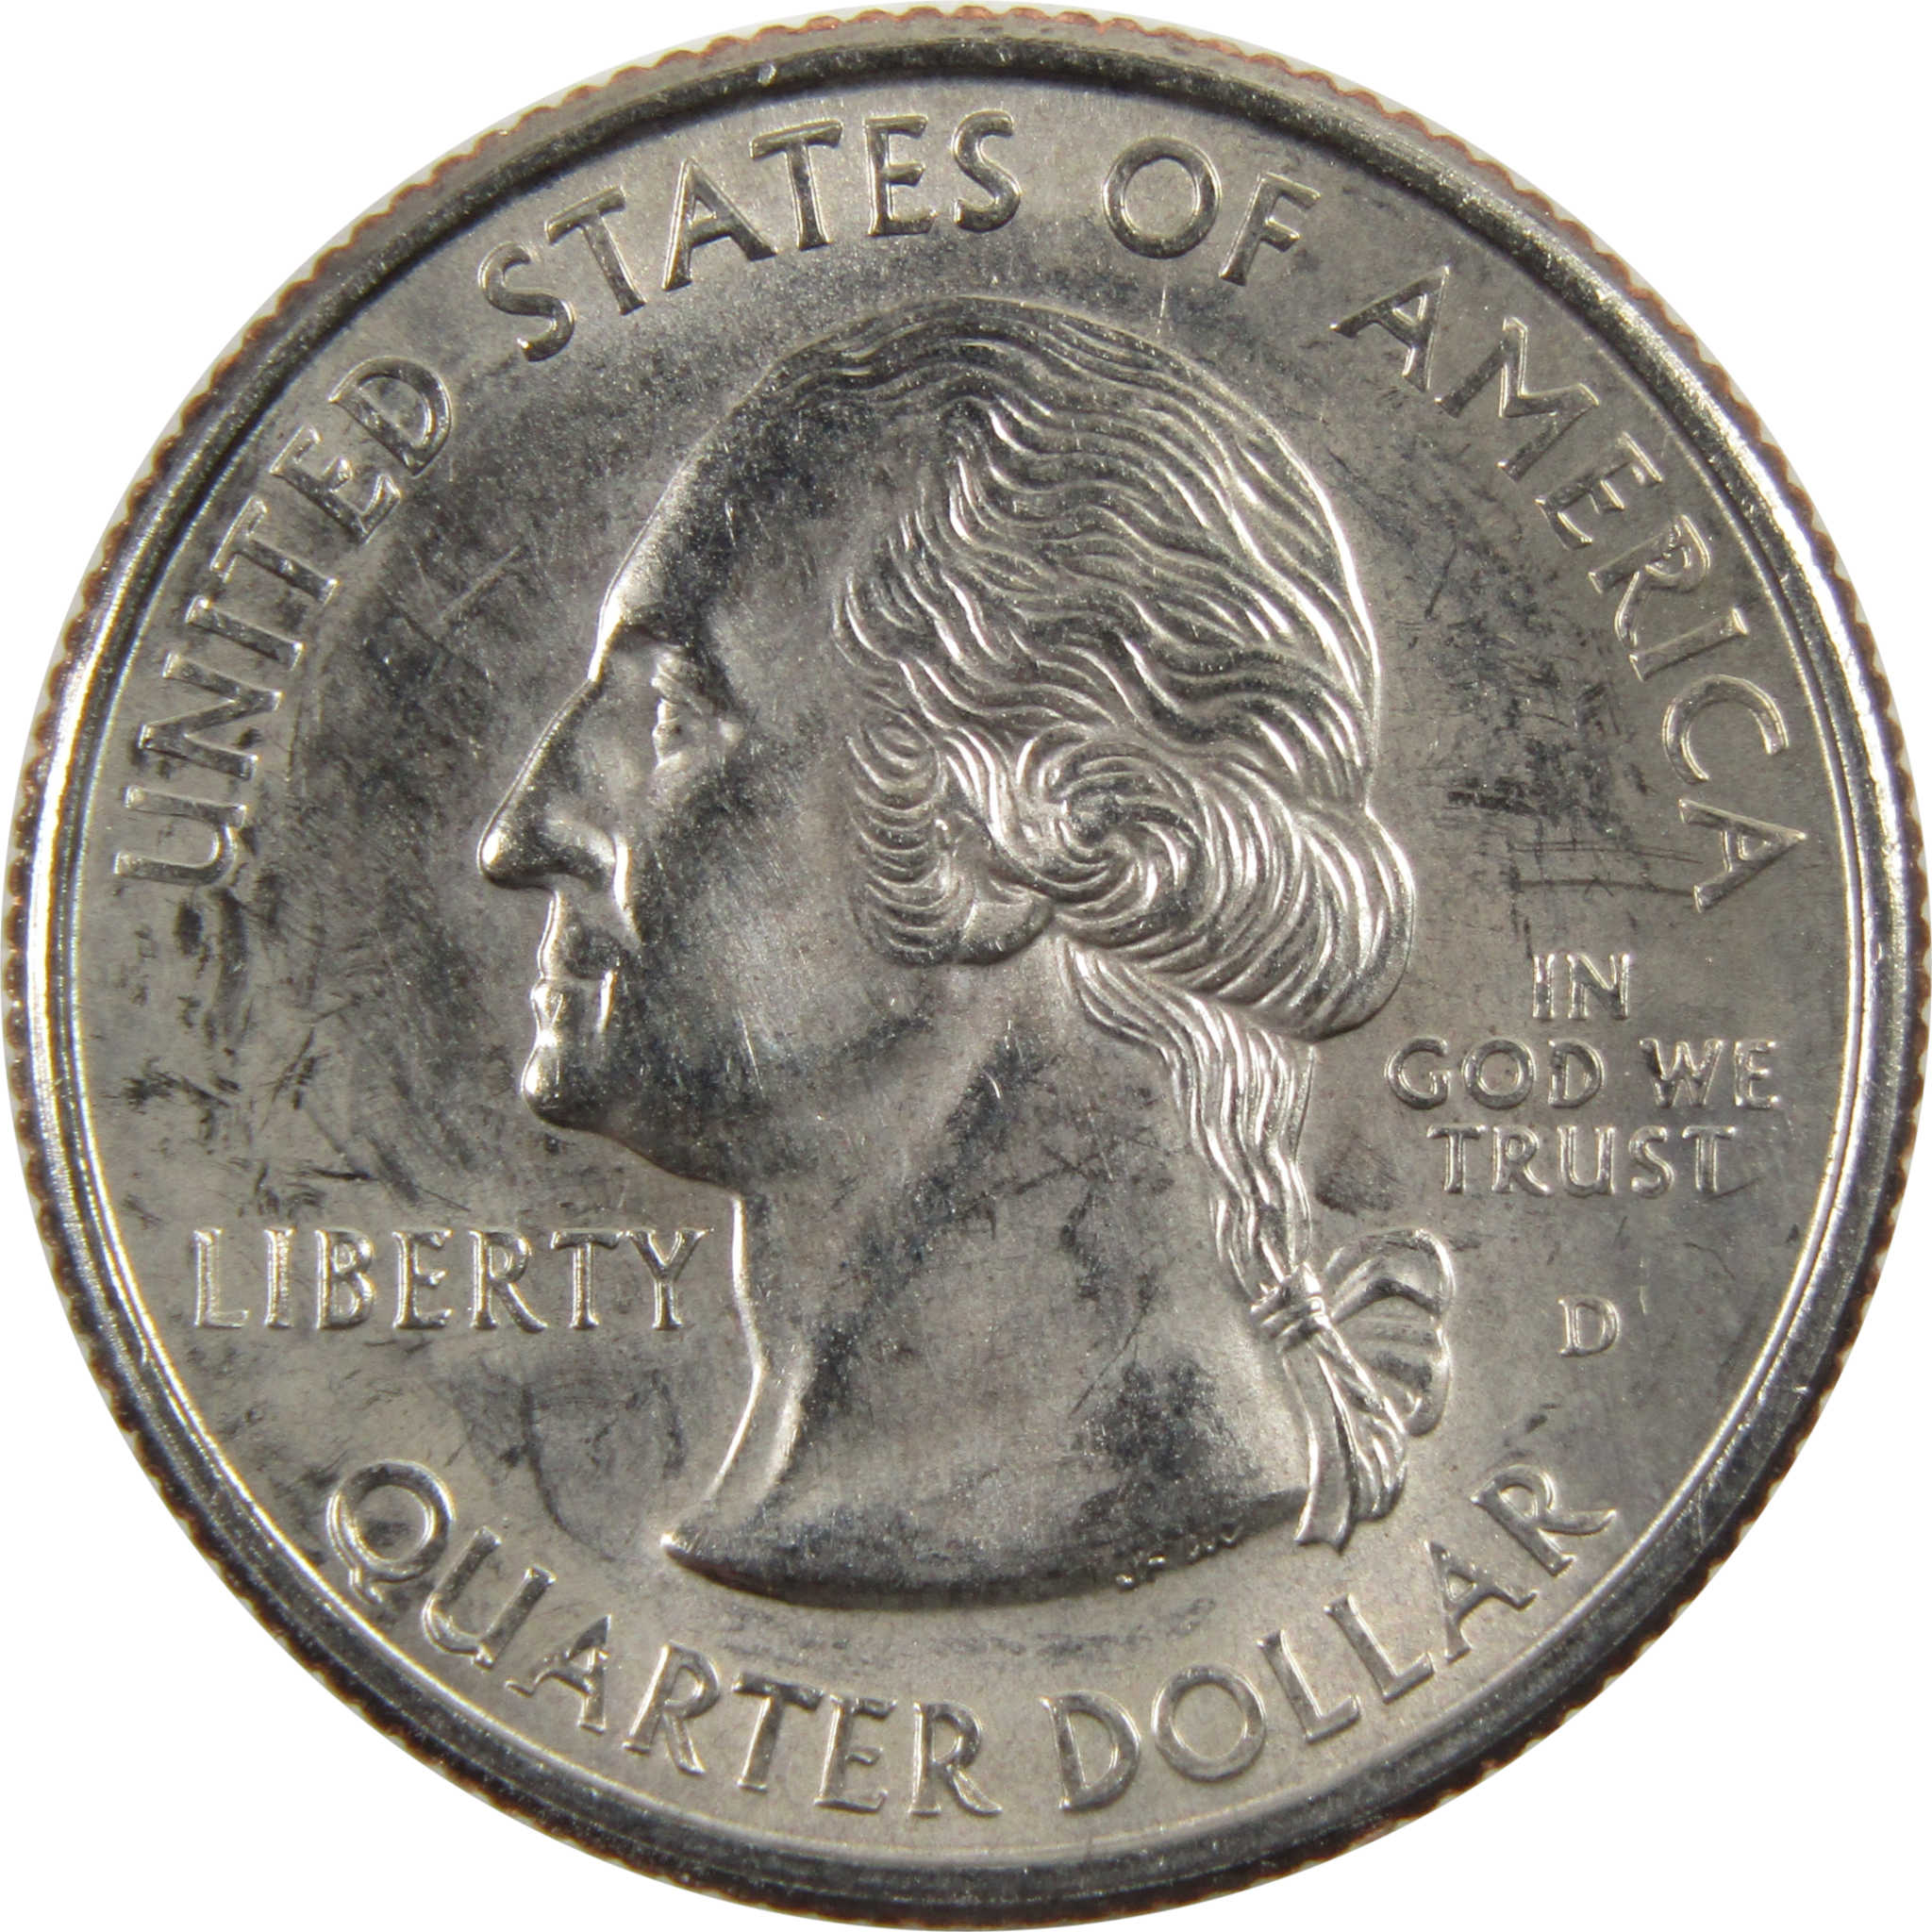 1999 D Connecticut State Quarter BU Uncirculated Clad 25c Coin